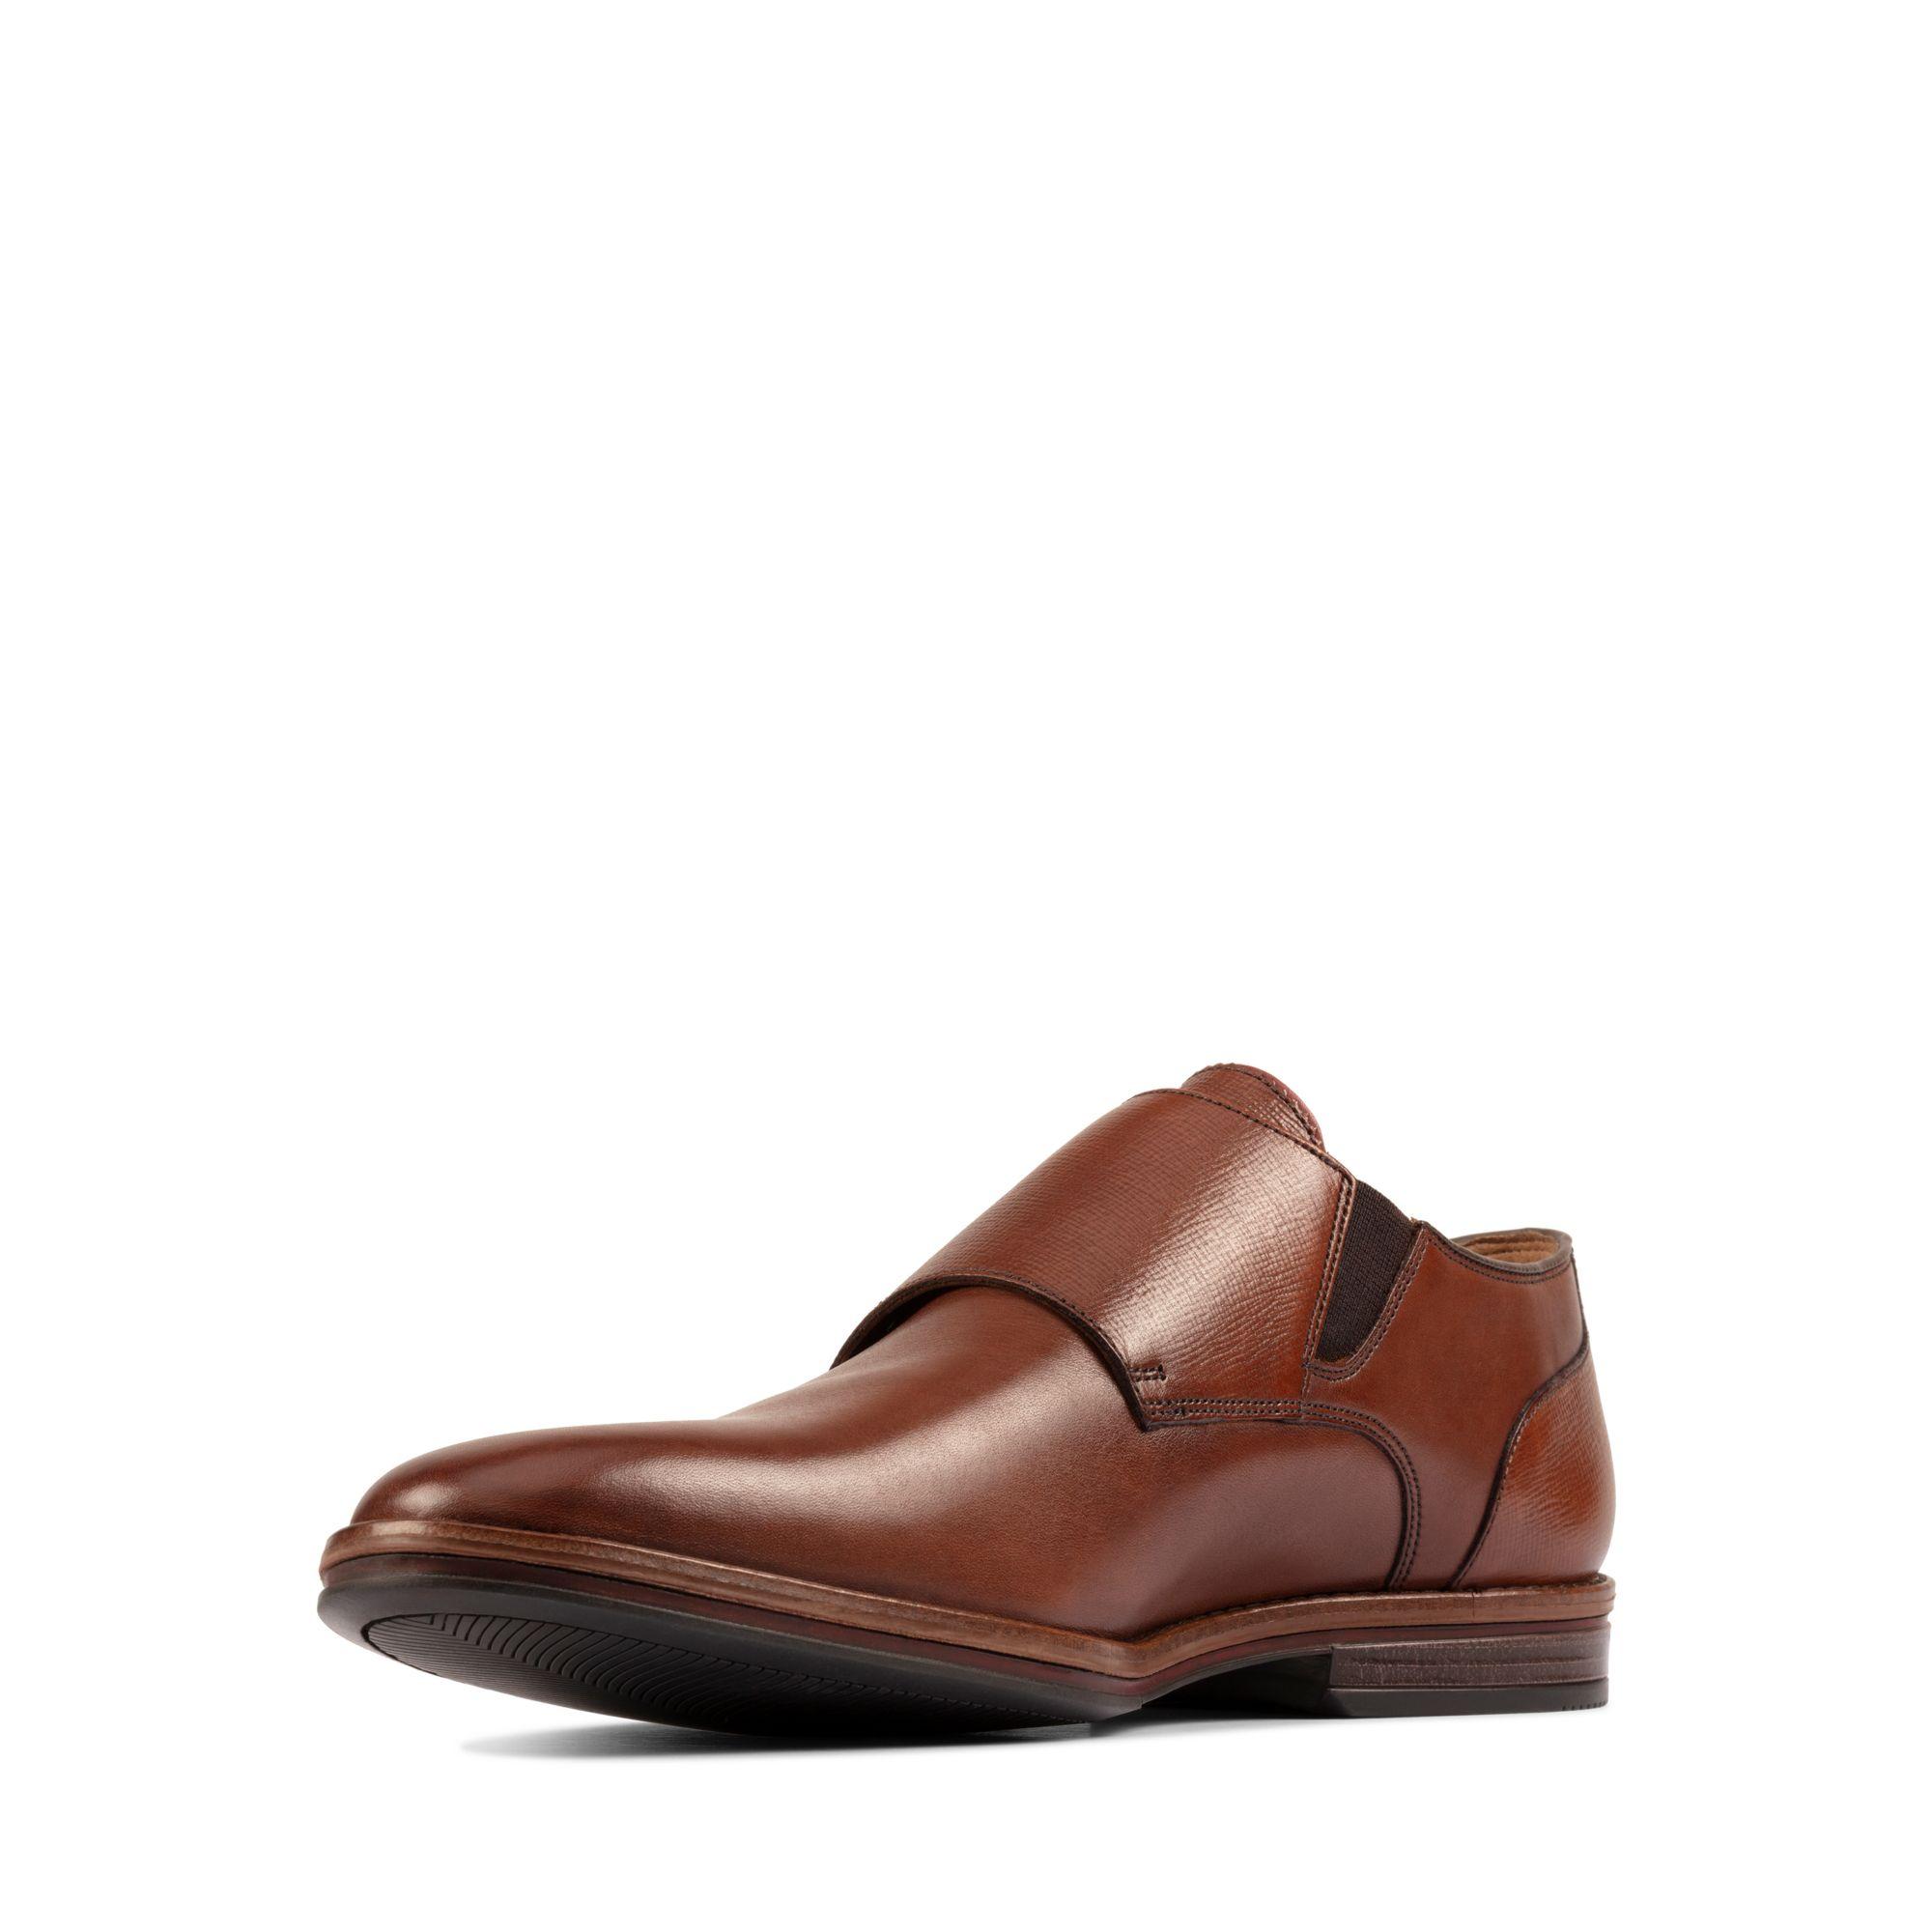 Clarks Delsin Stride Monk Strap Shoes In Grey Leather UK Size 8.5 9.5 G 